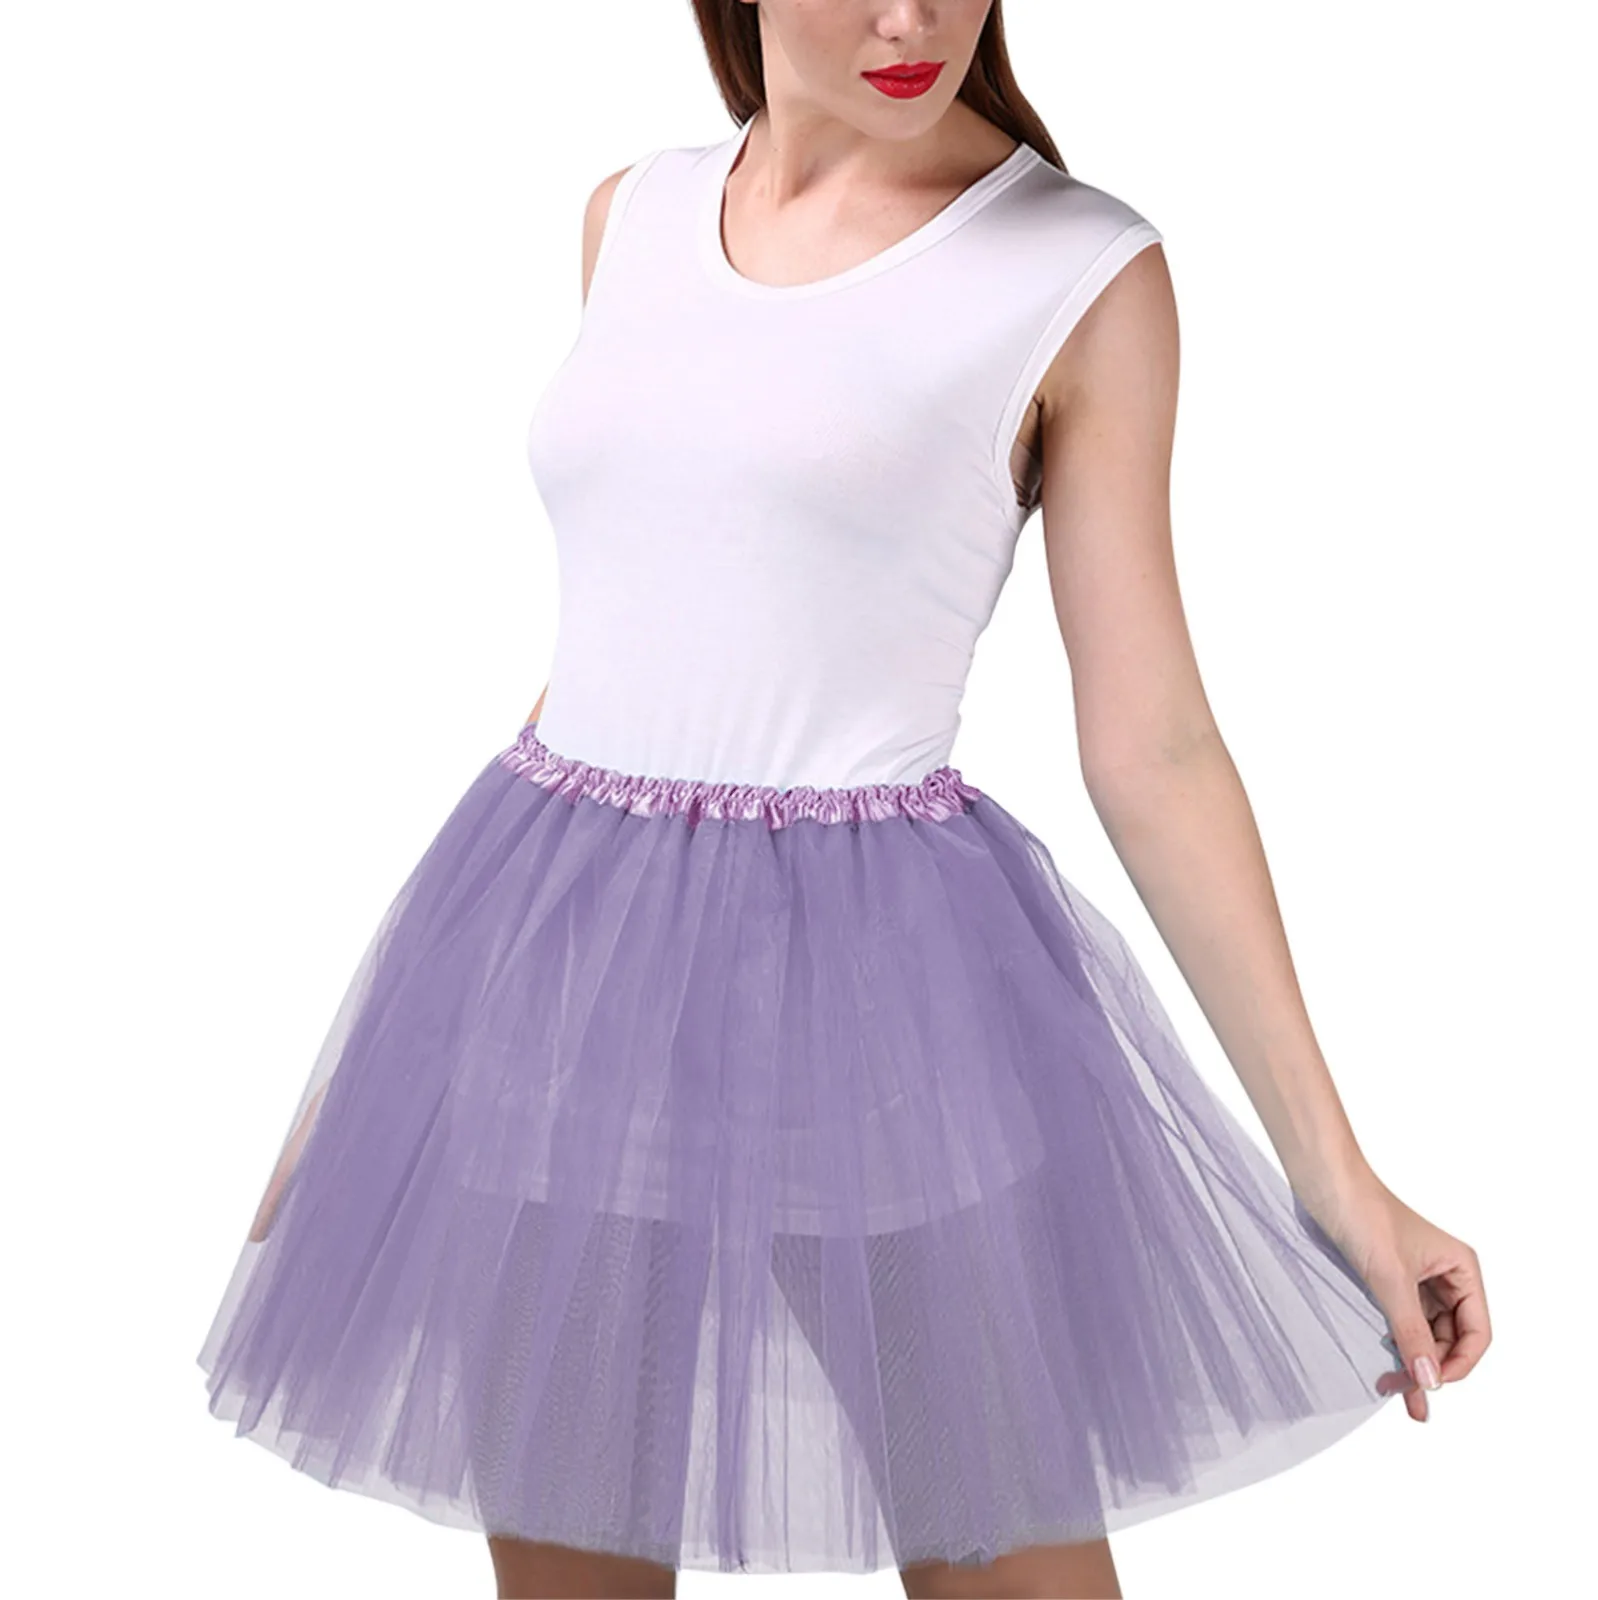 

Women Organza Tutu Skirt Adult Vintage Lolita Petticoat Fancy Ballet Dancewear Party Costume Ball Gown Short Skirt Crinoline